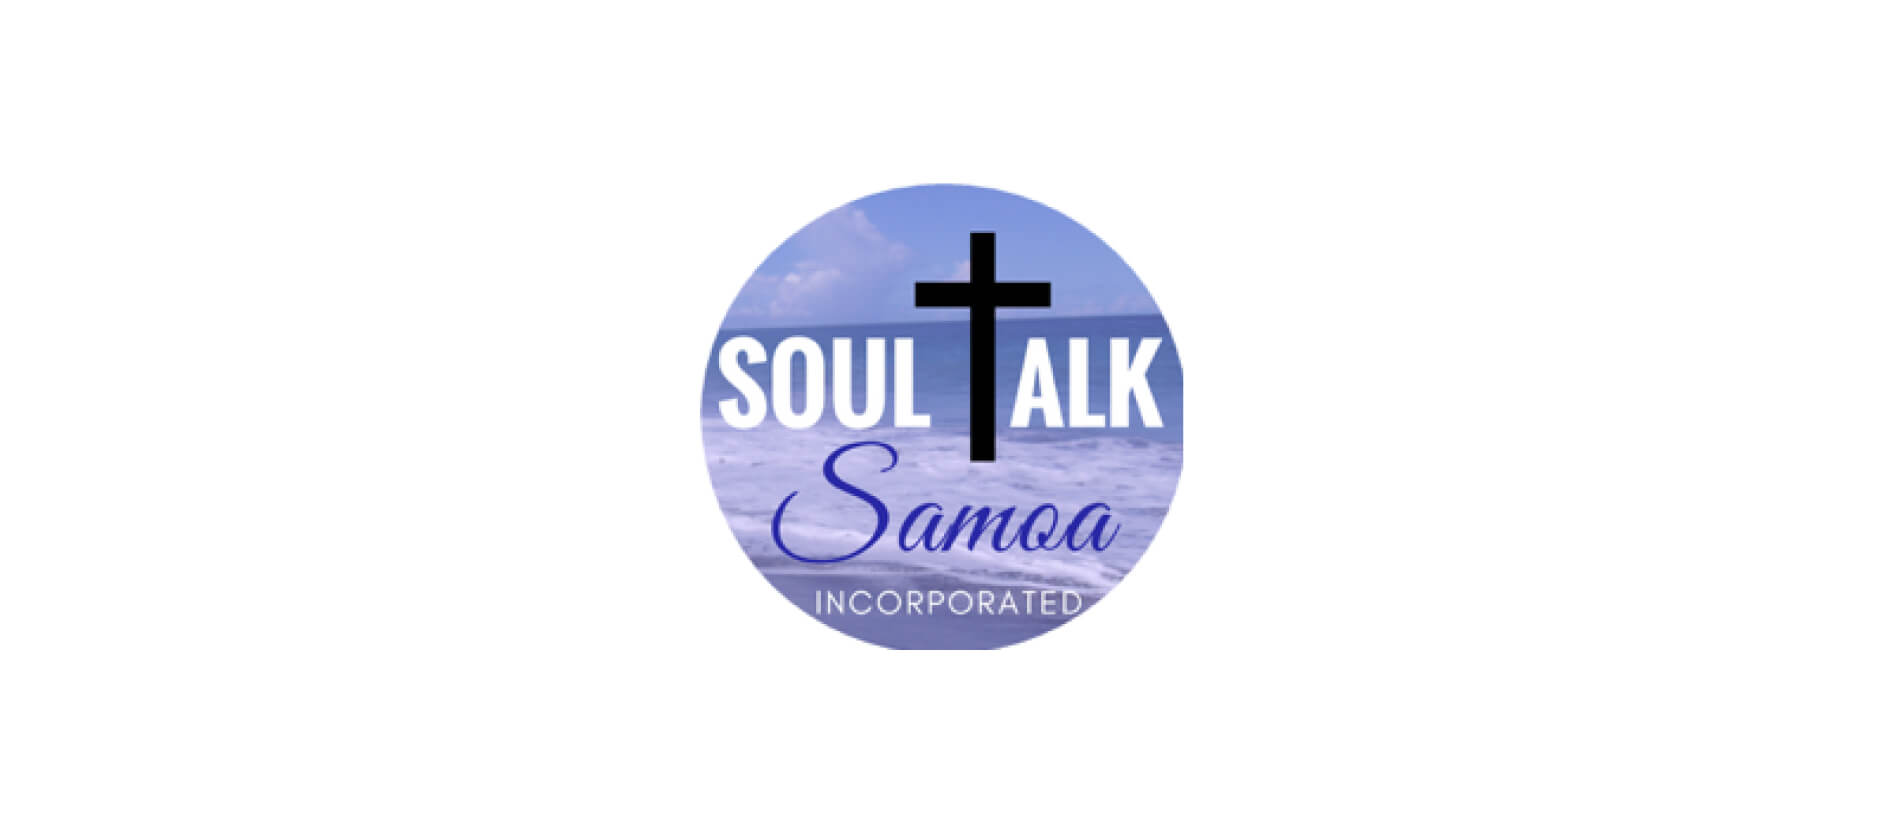 soal talk samoa incorporated logo